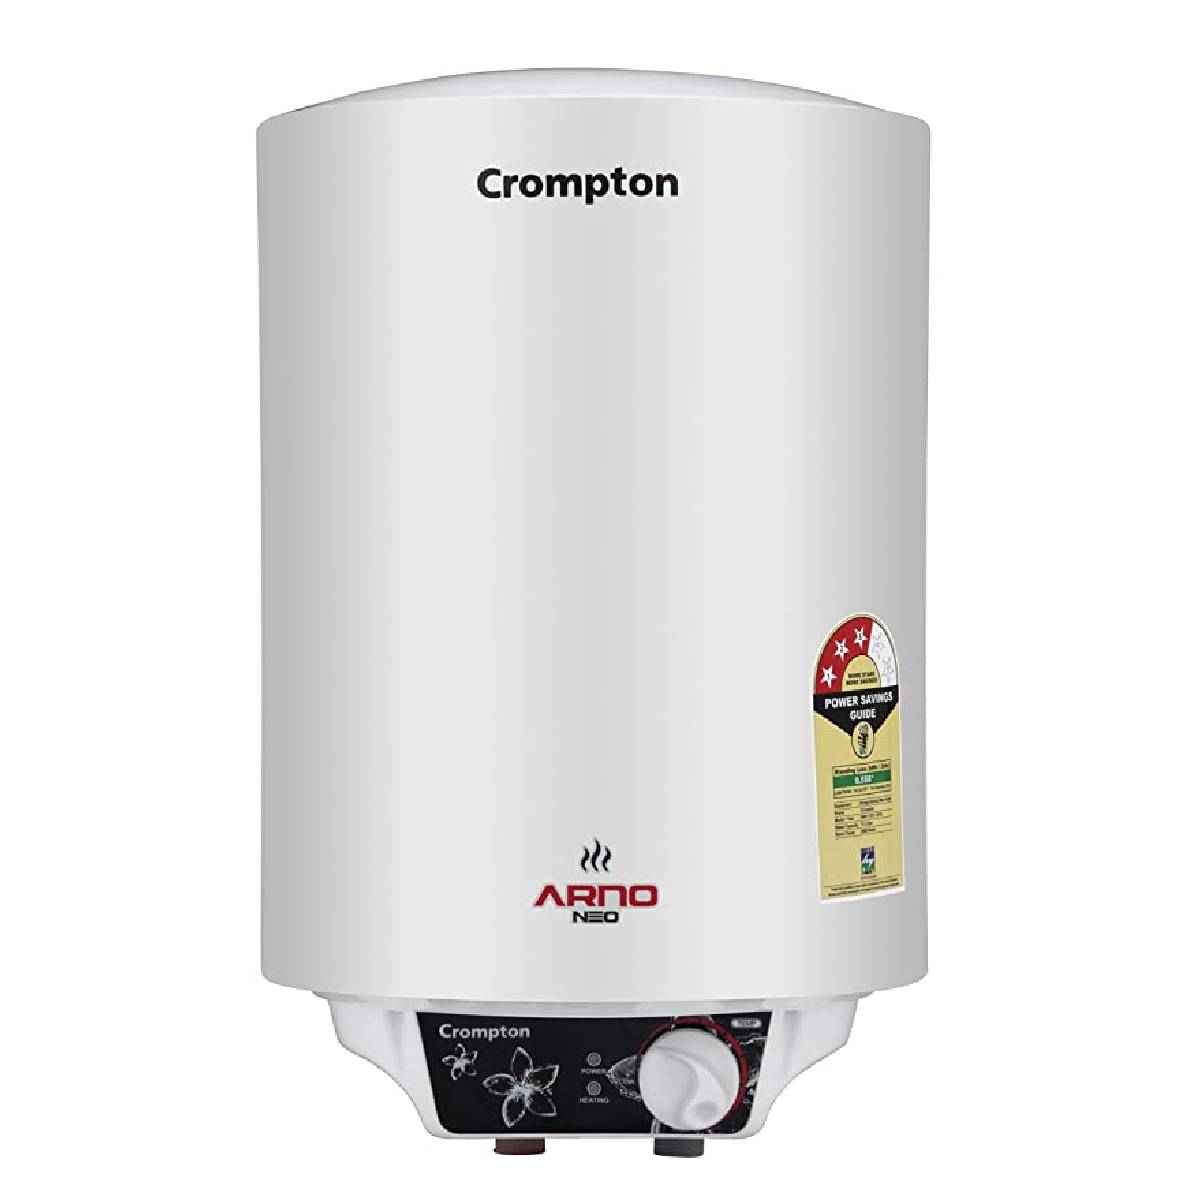 Crompton Arno Neo ASWH-2115 15-Litre Storage Water Heater